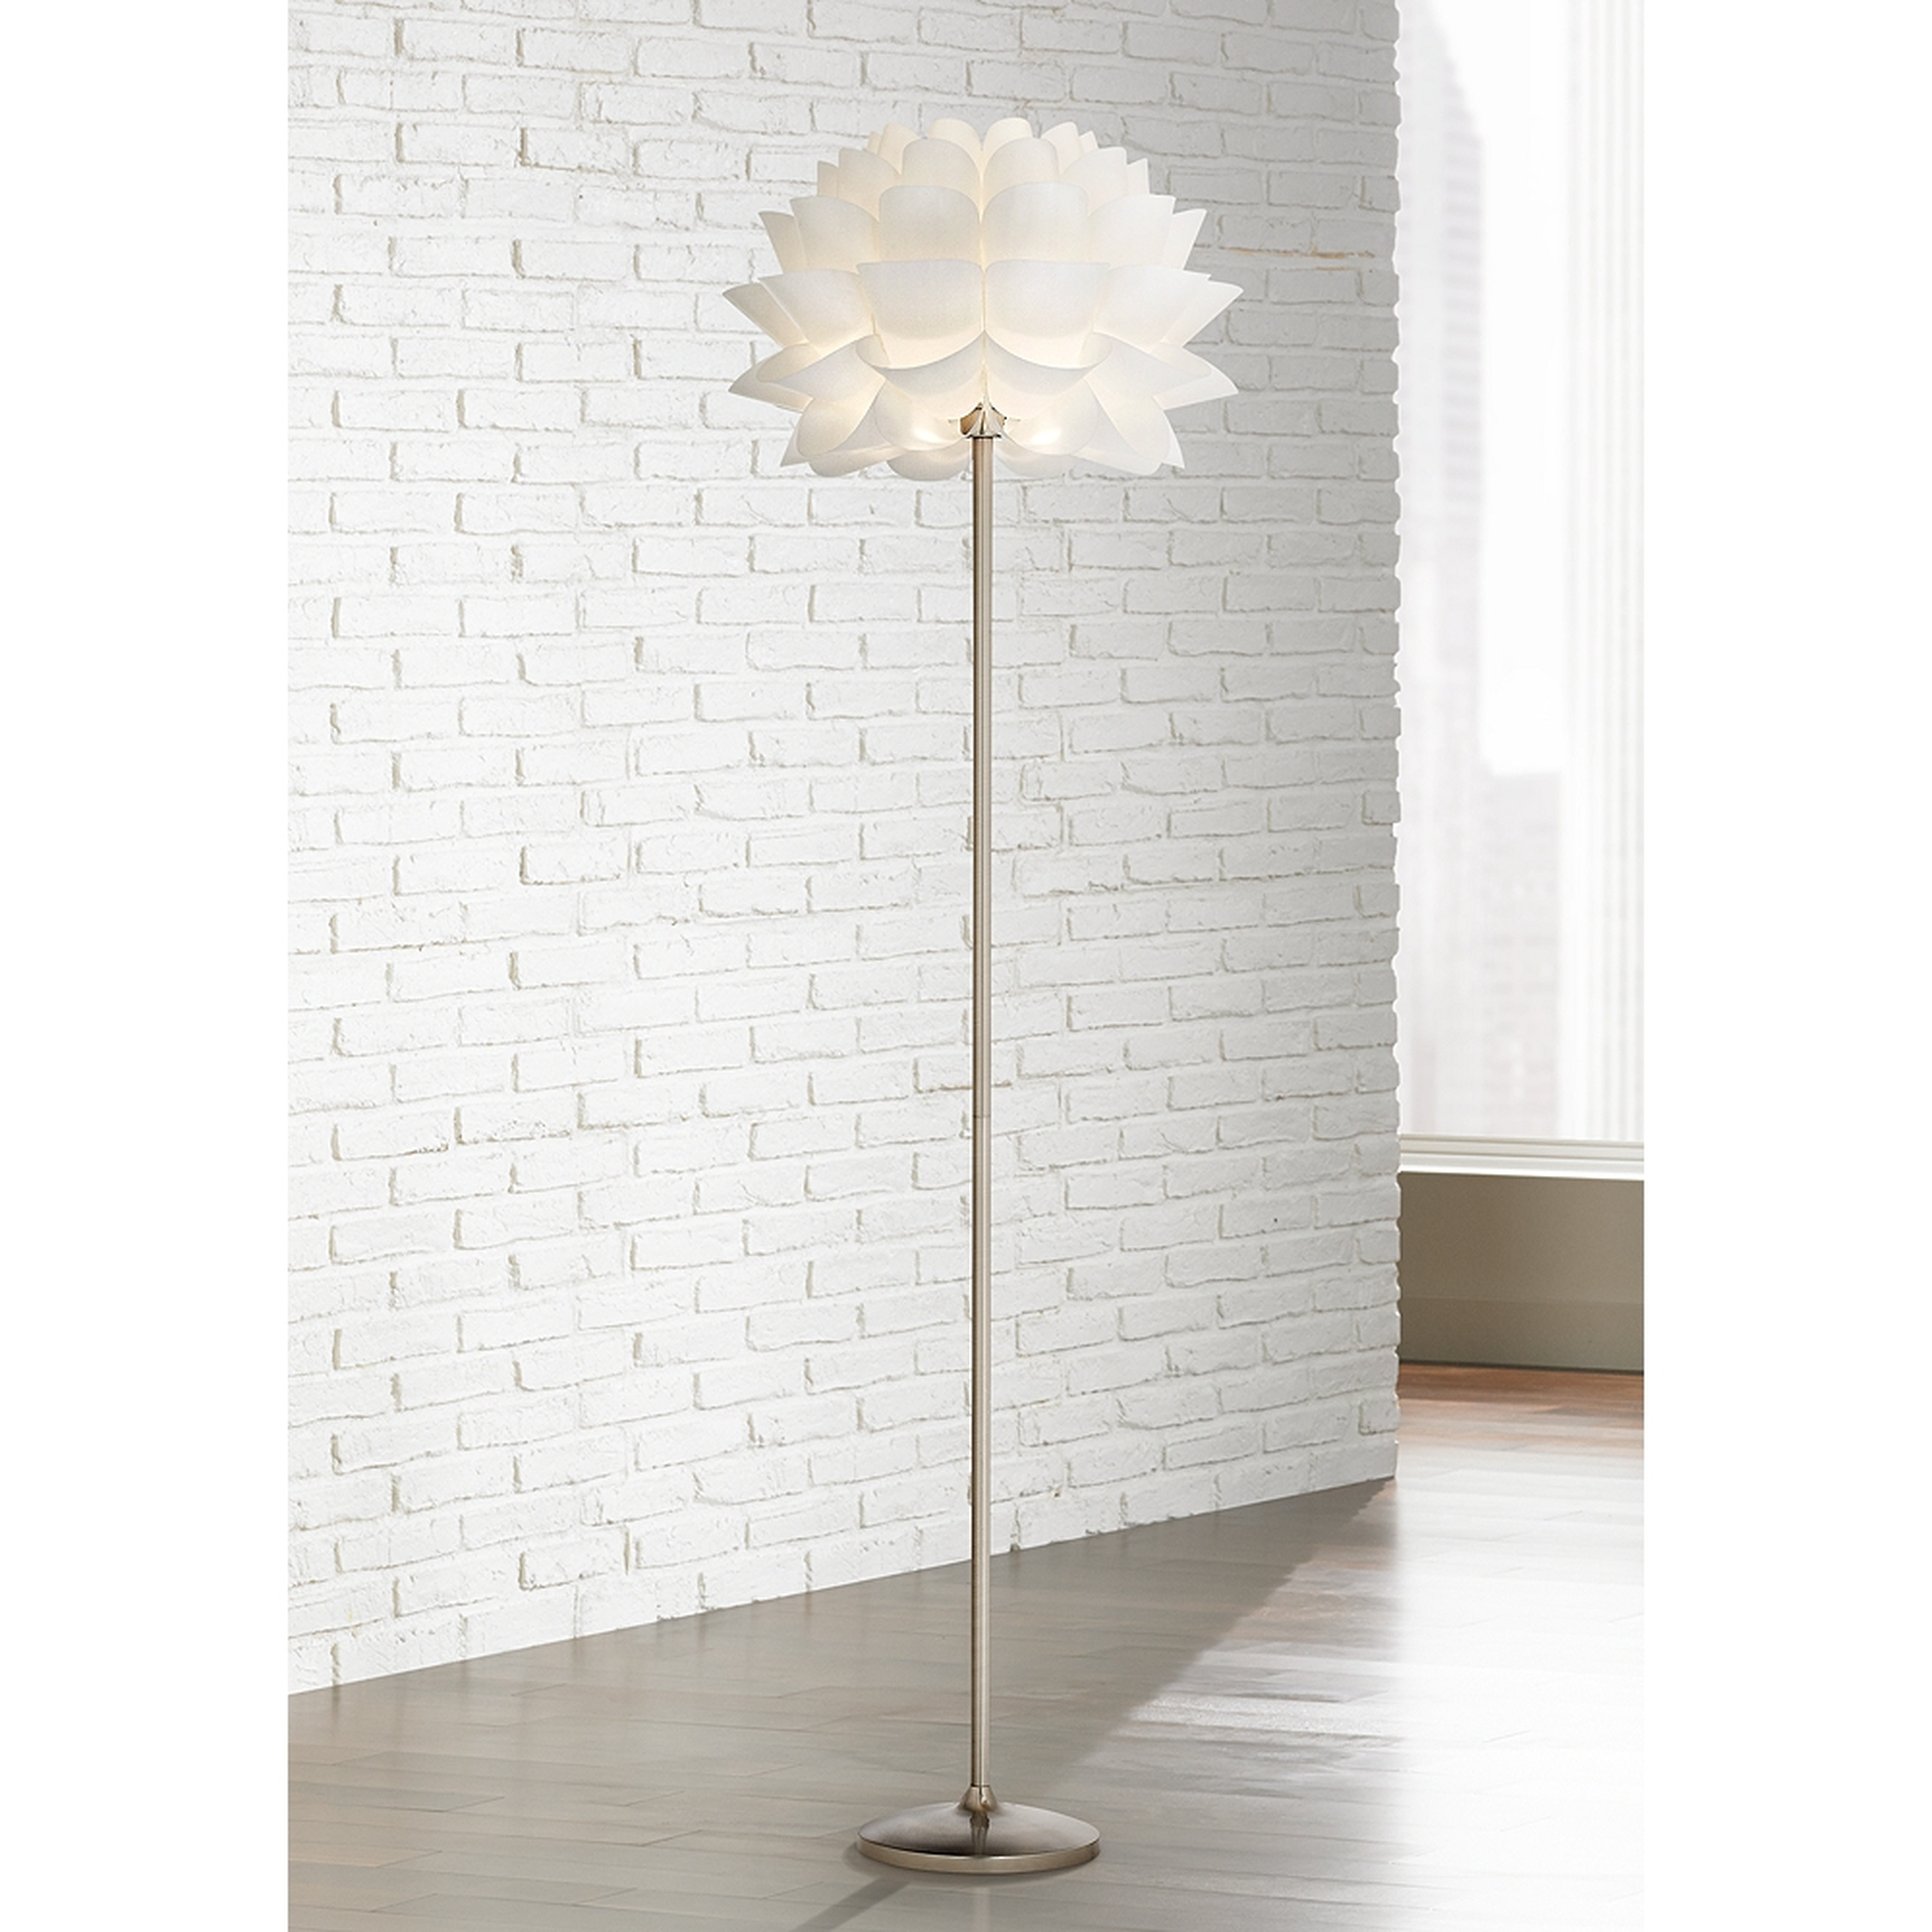 Possini Euro Design White Flower Floor Lamp - Style # M4705 - Lamps Plus